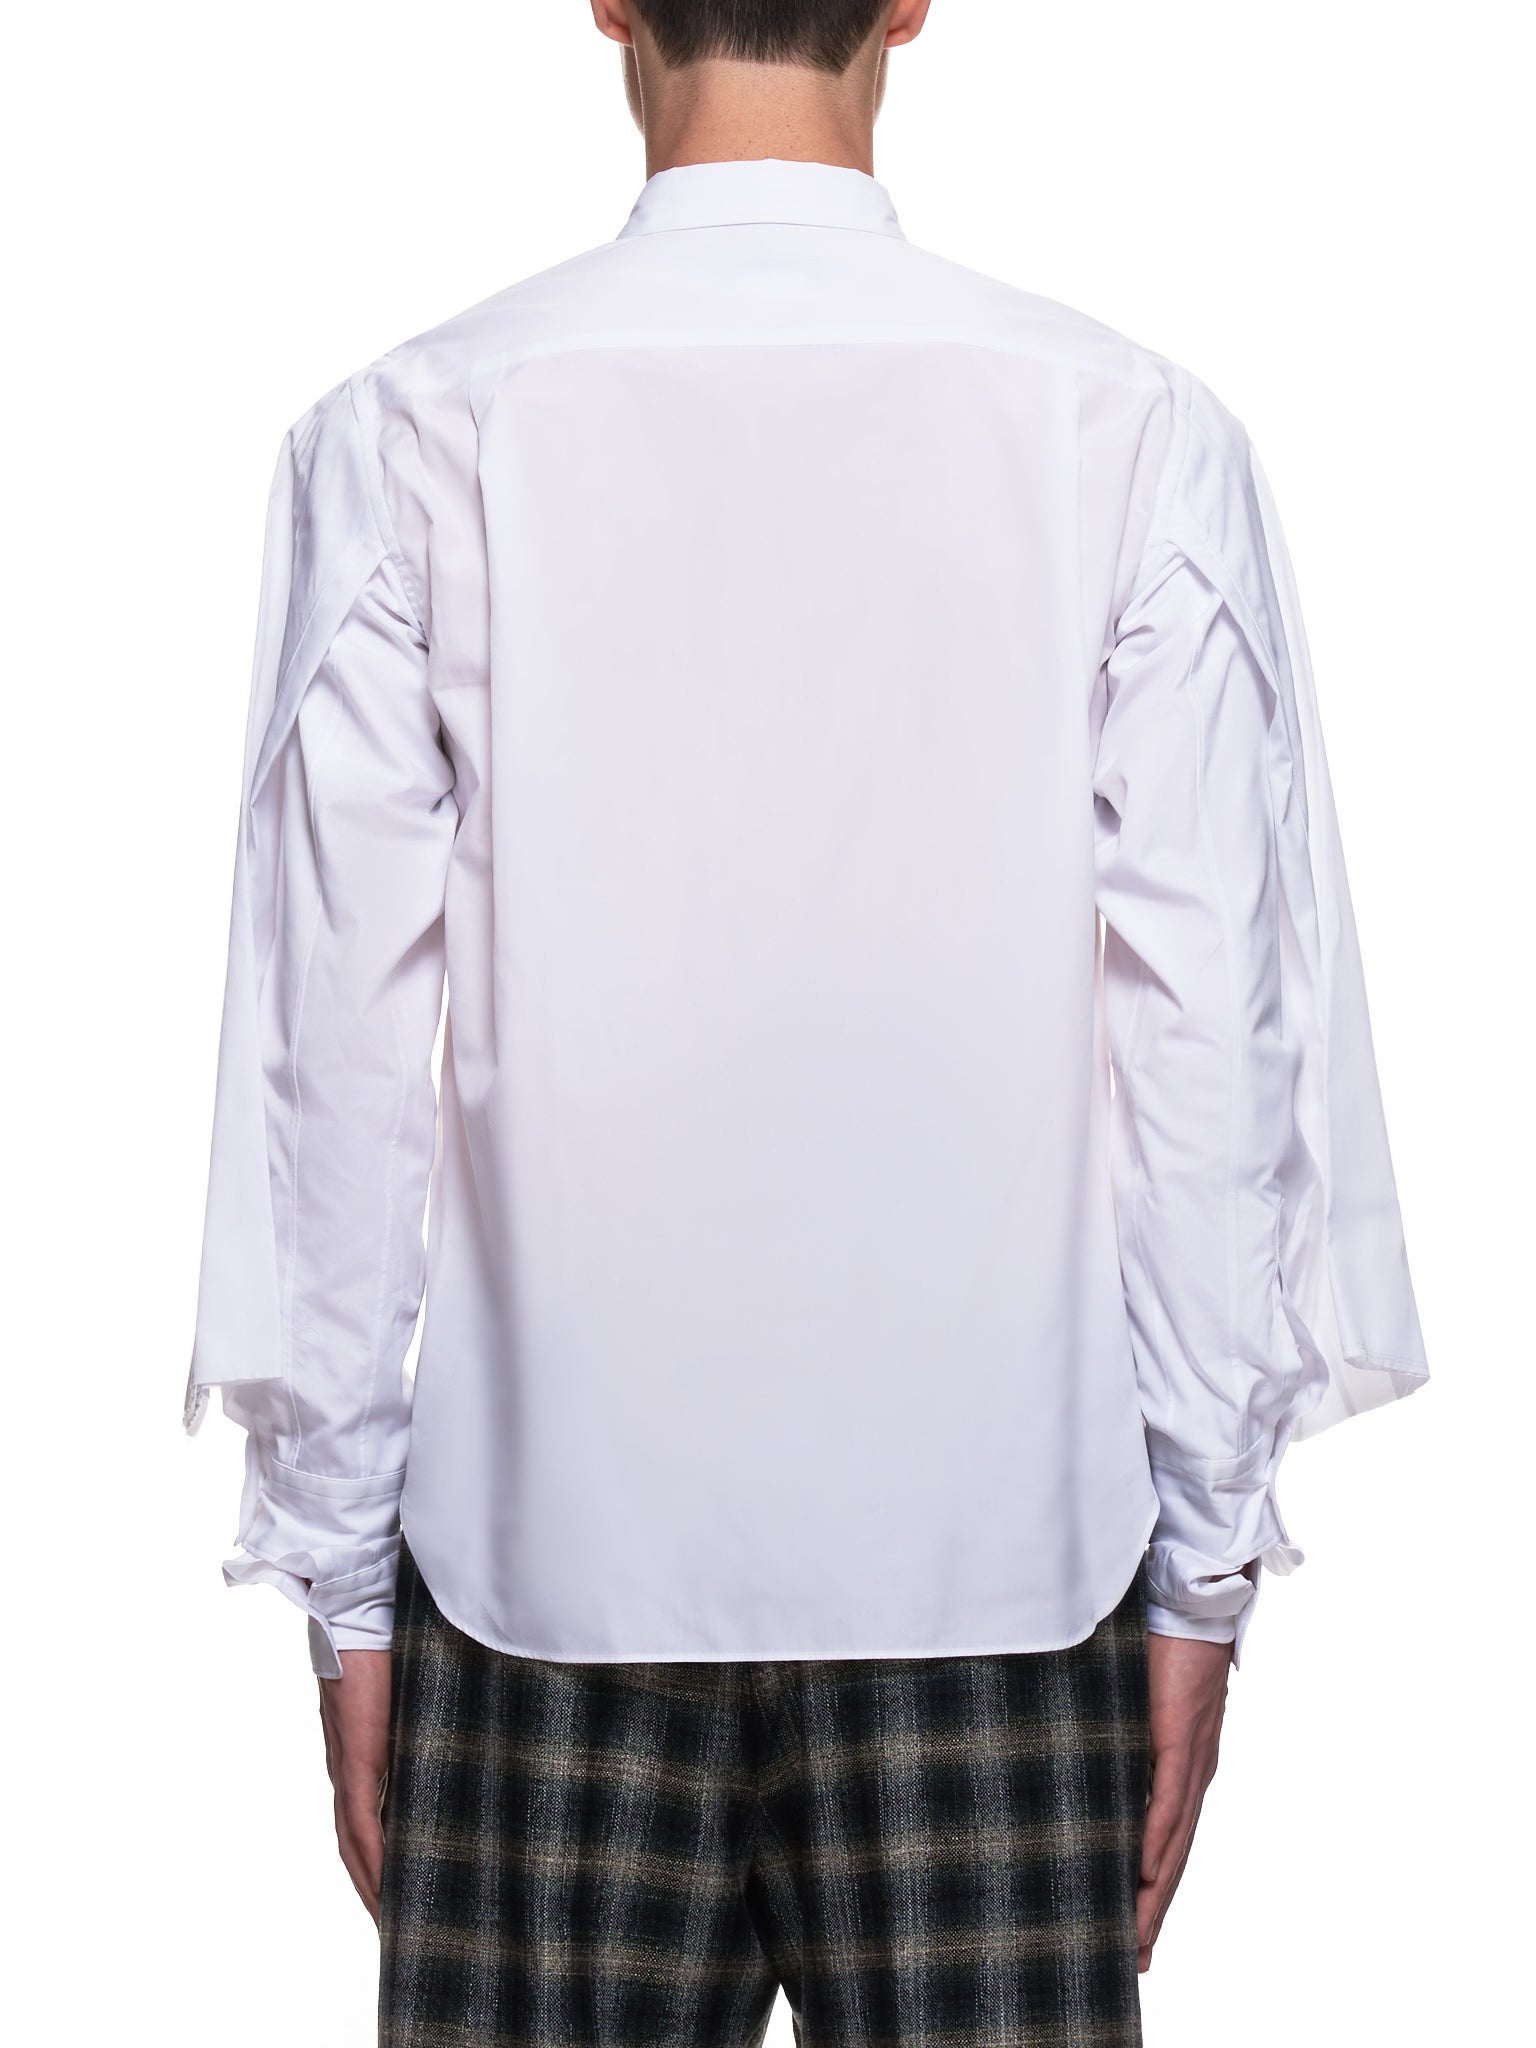 Layered Sleeve Button-Up Shirt (PF-B007-051-WHITE)